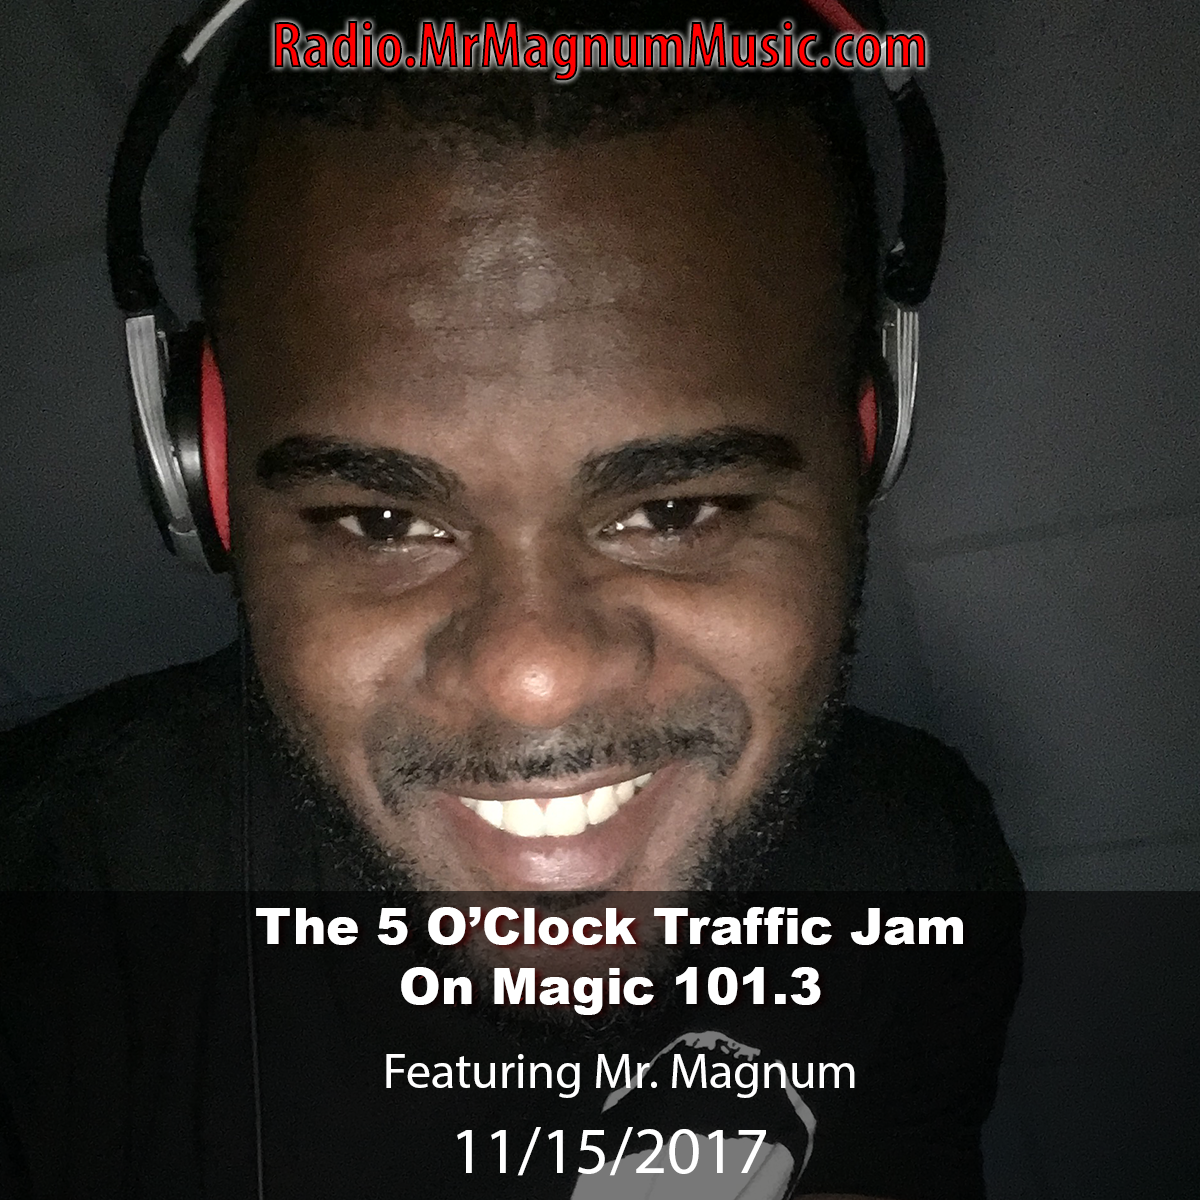 The 5 O'Clock Traffic Jam 20171115 featuring Gainesville's #1 DJ, Mr. Magnum on Magic 101.3